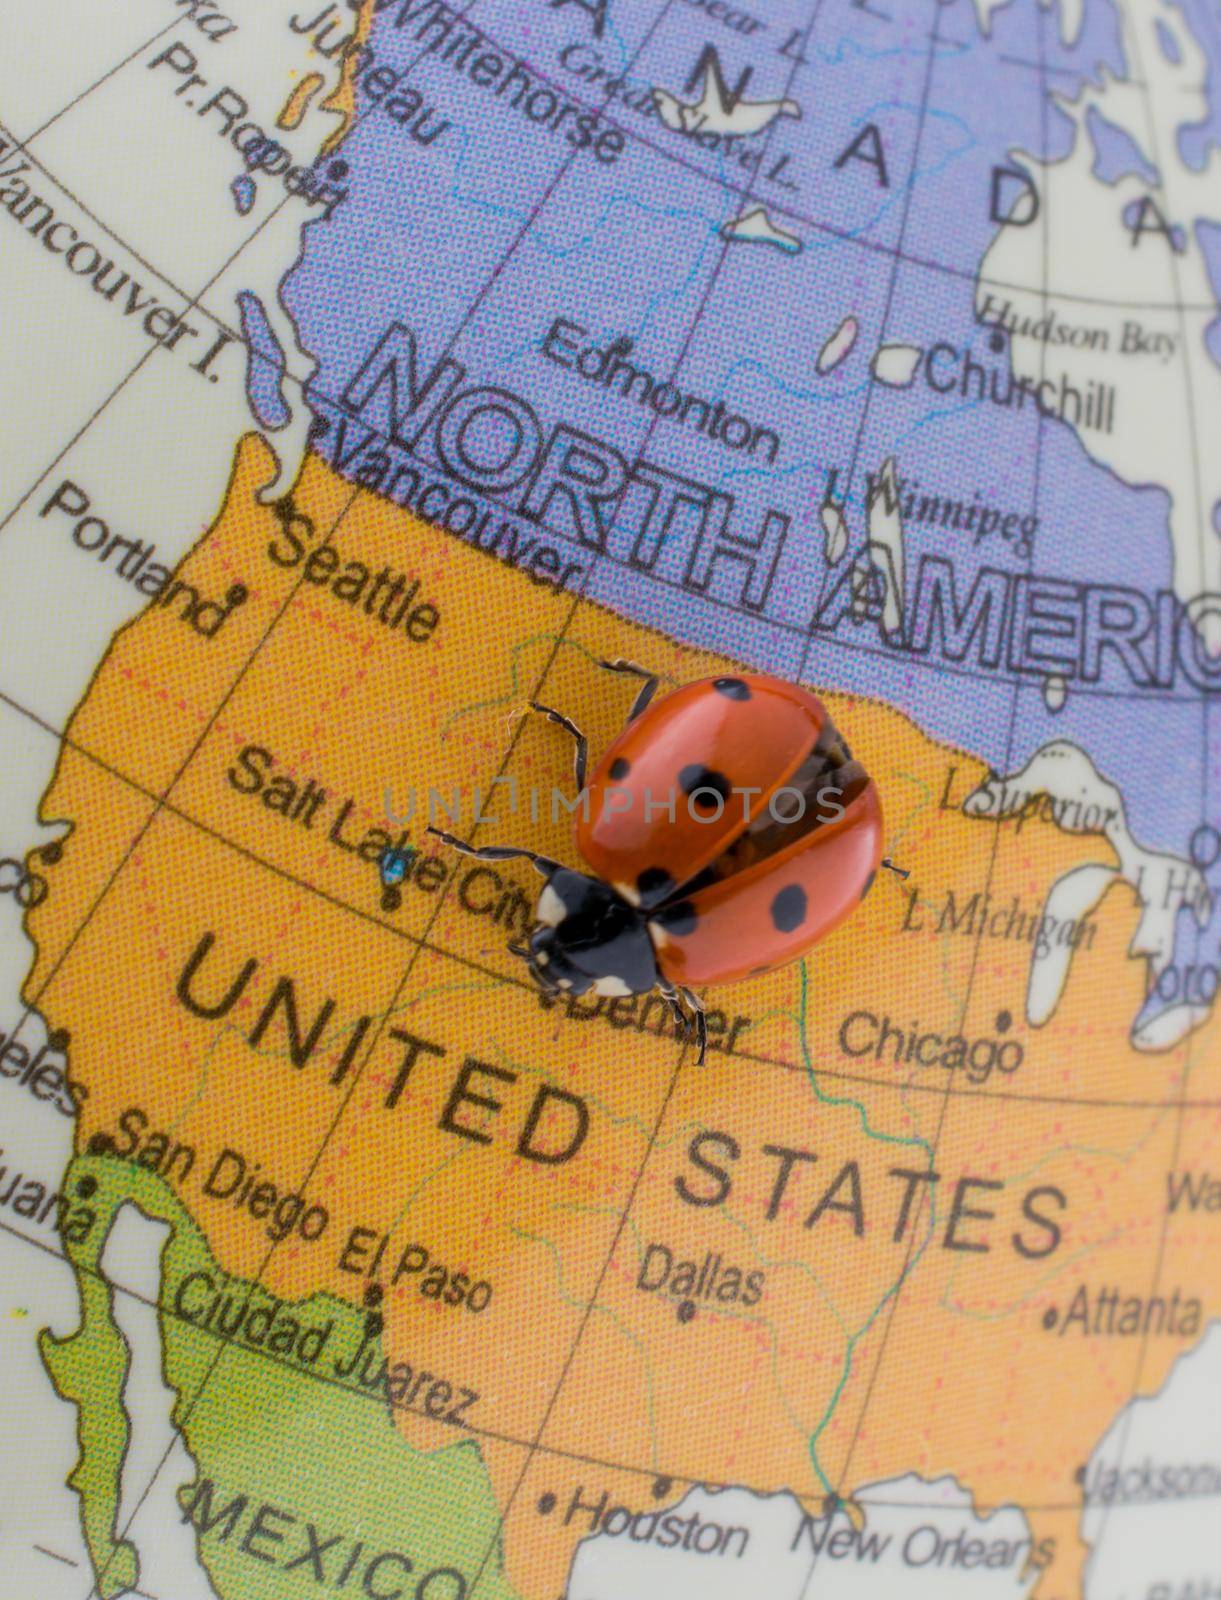 Ladybug on a little colorful model globe  by berkay